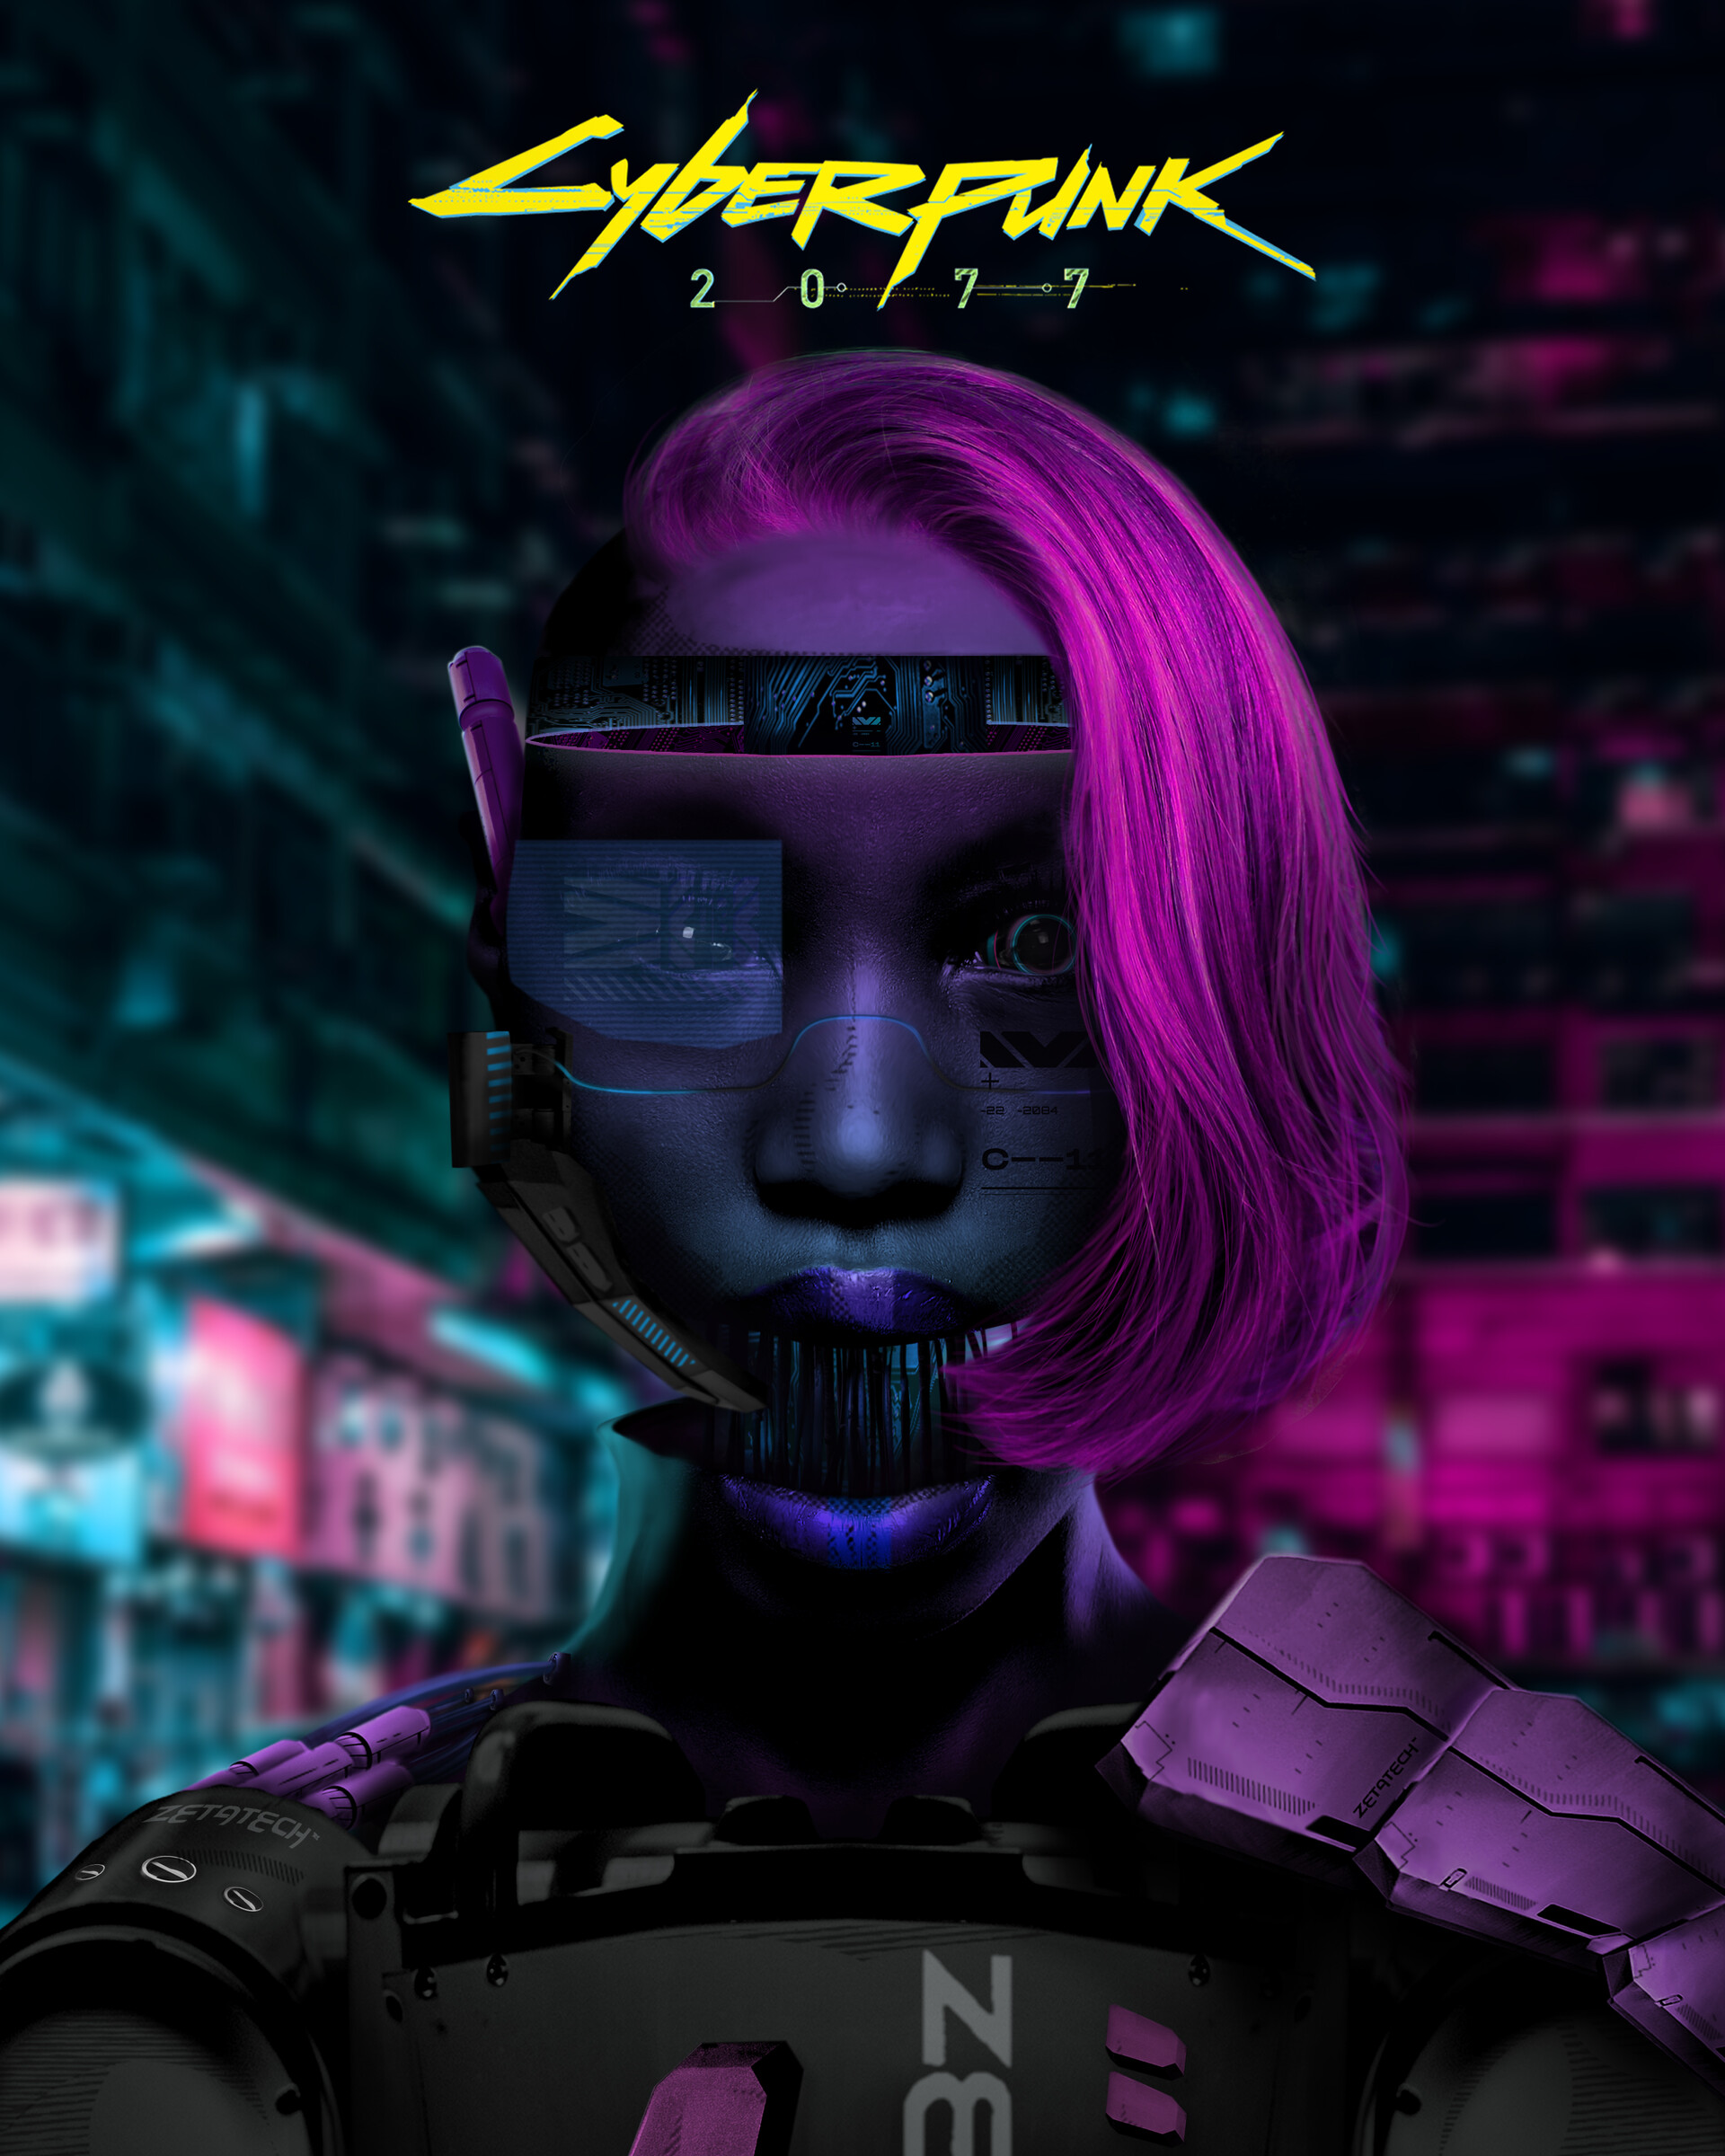 ArtStation - Cyberpunk Mobile phone wallpaper